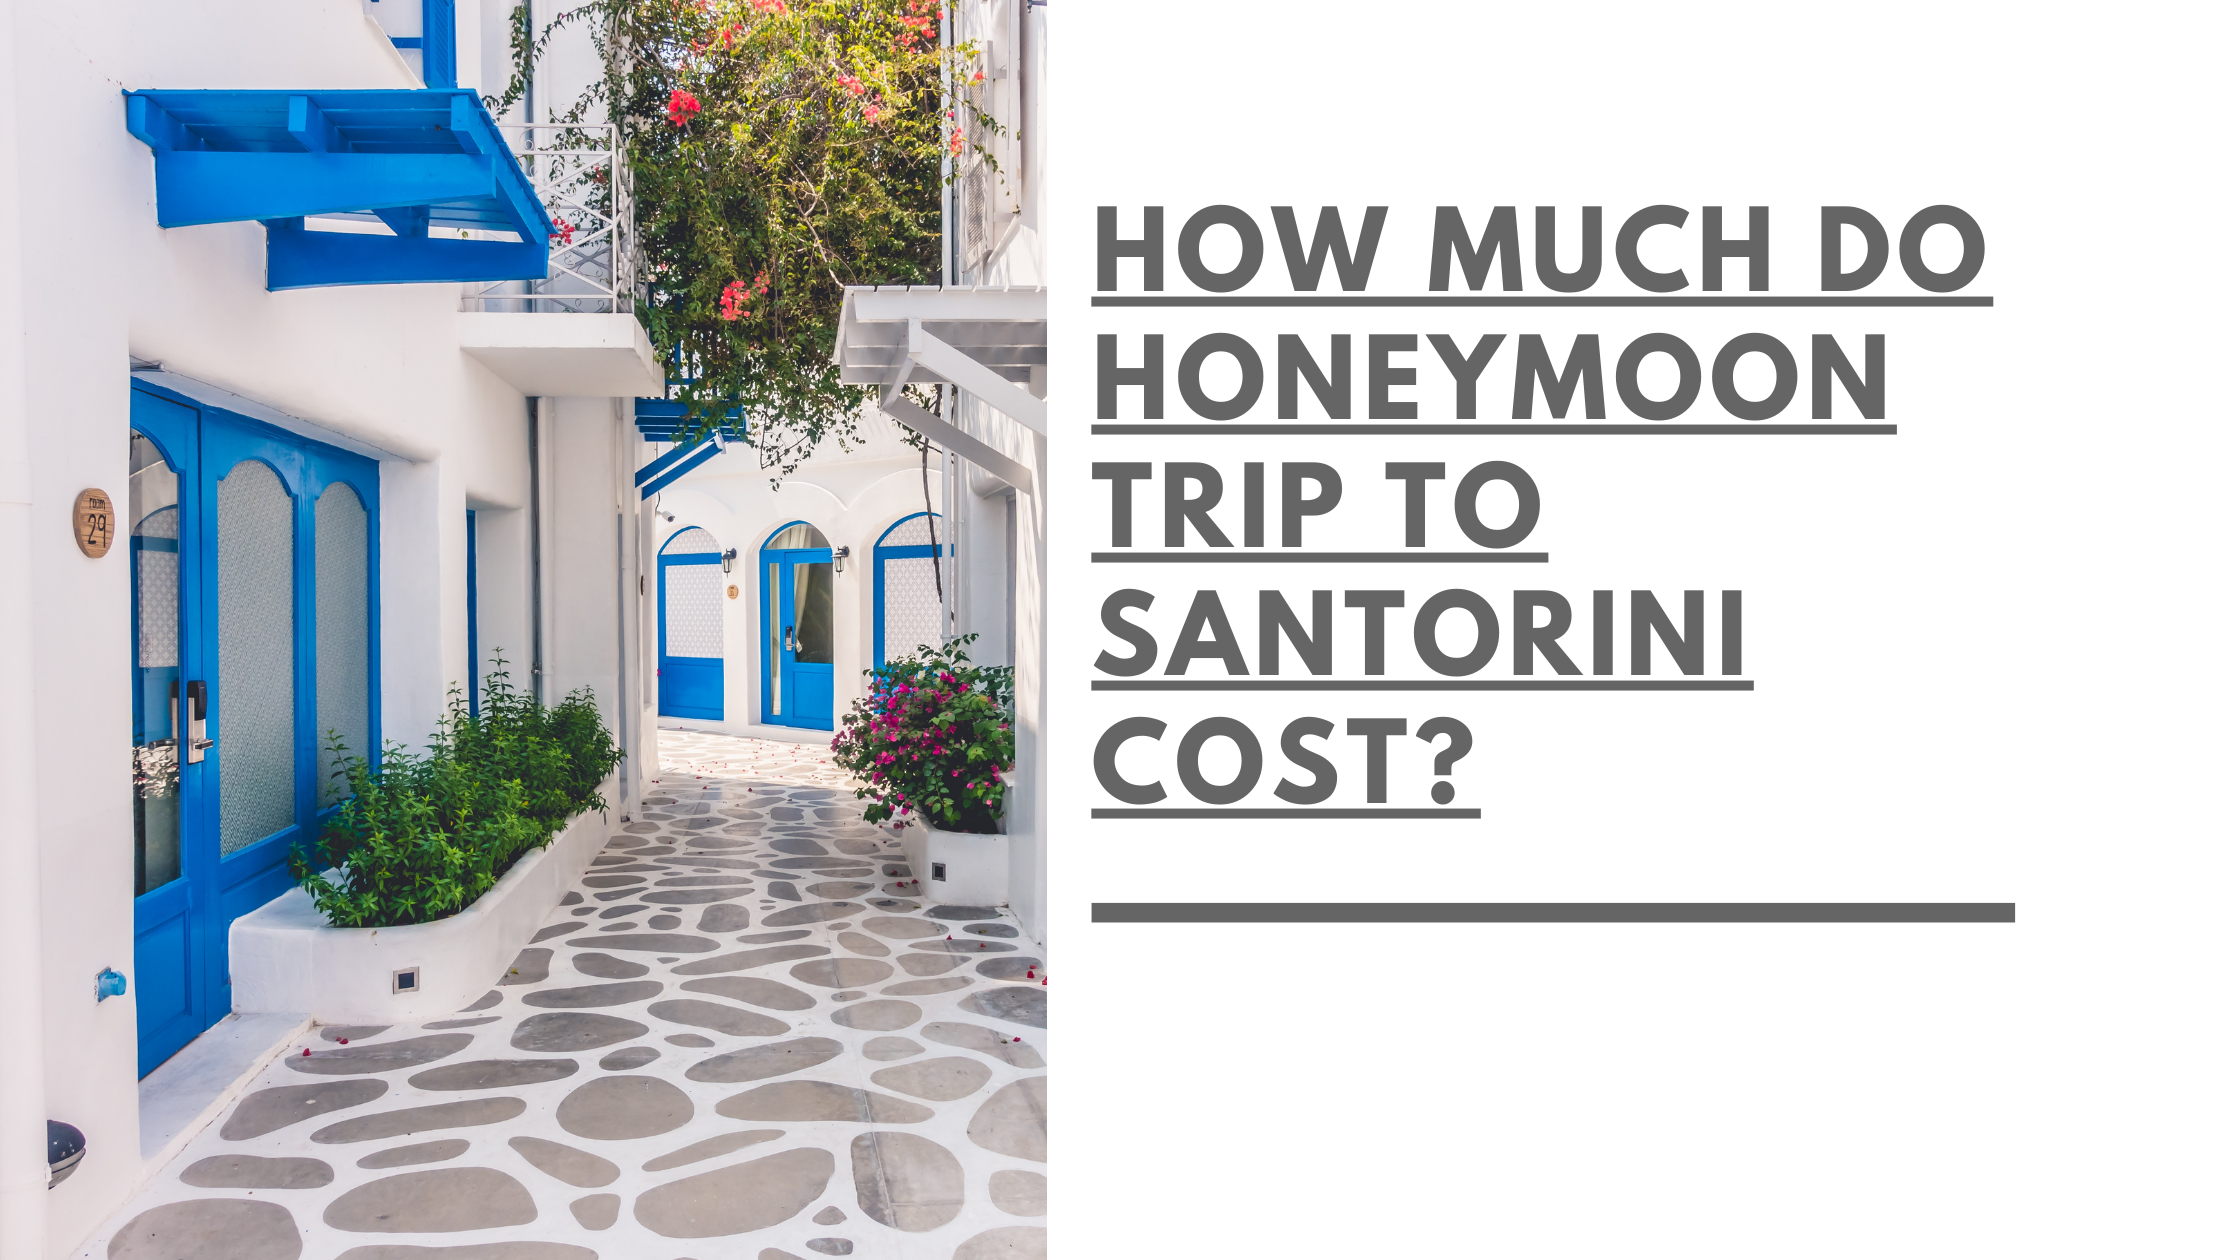 How Much Do Honeymoon Trip To Santorini Cost?